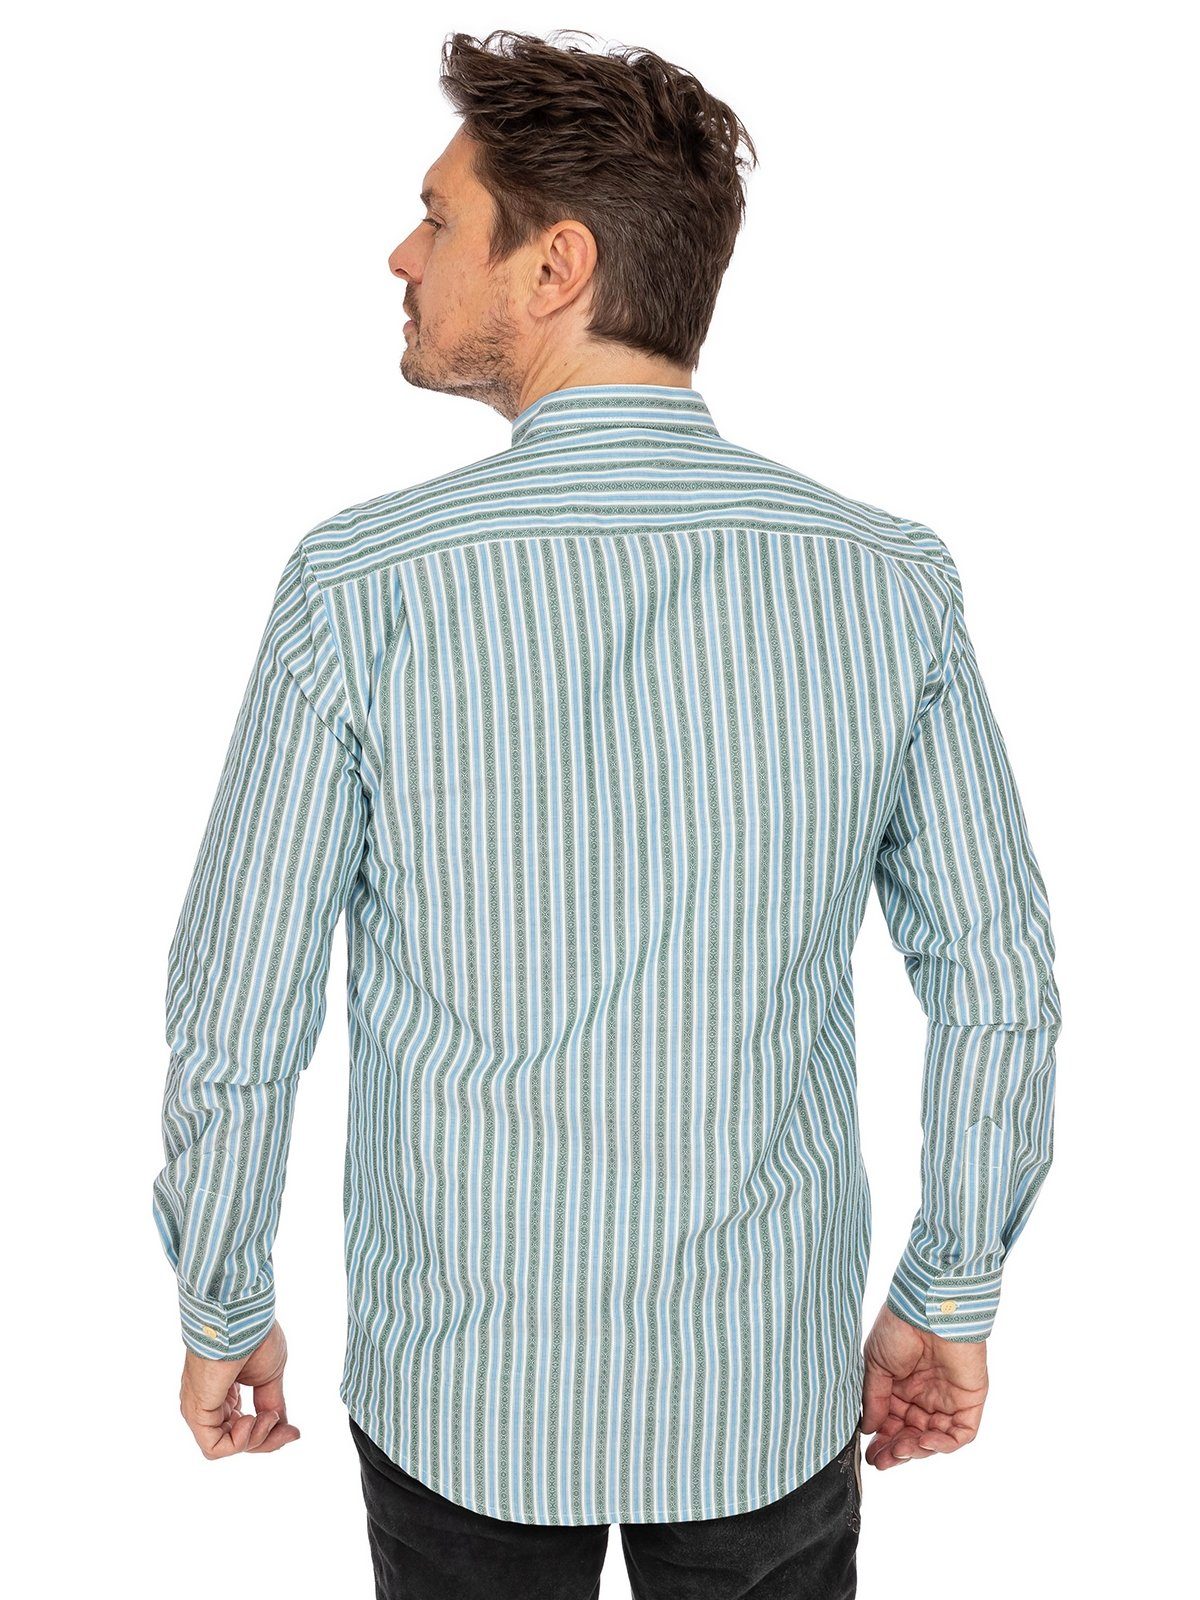 Gipfelstürmer (Regular 420000-4258-53 Fit) mittelgrün Trachtenhemd Pfoadhemd